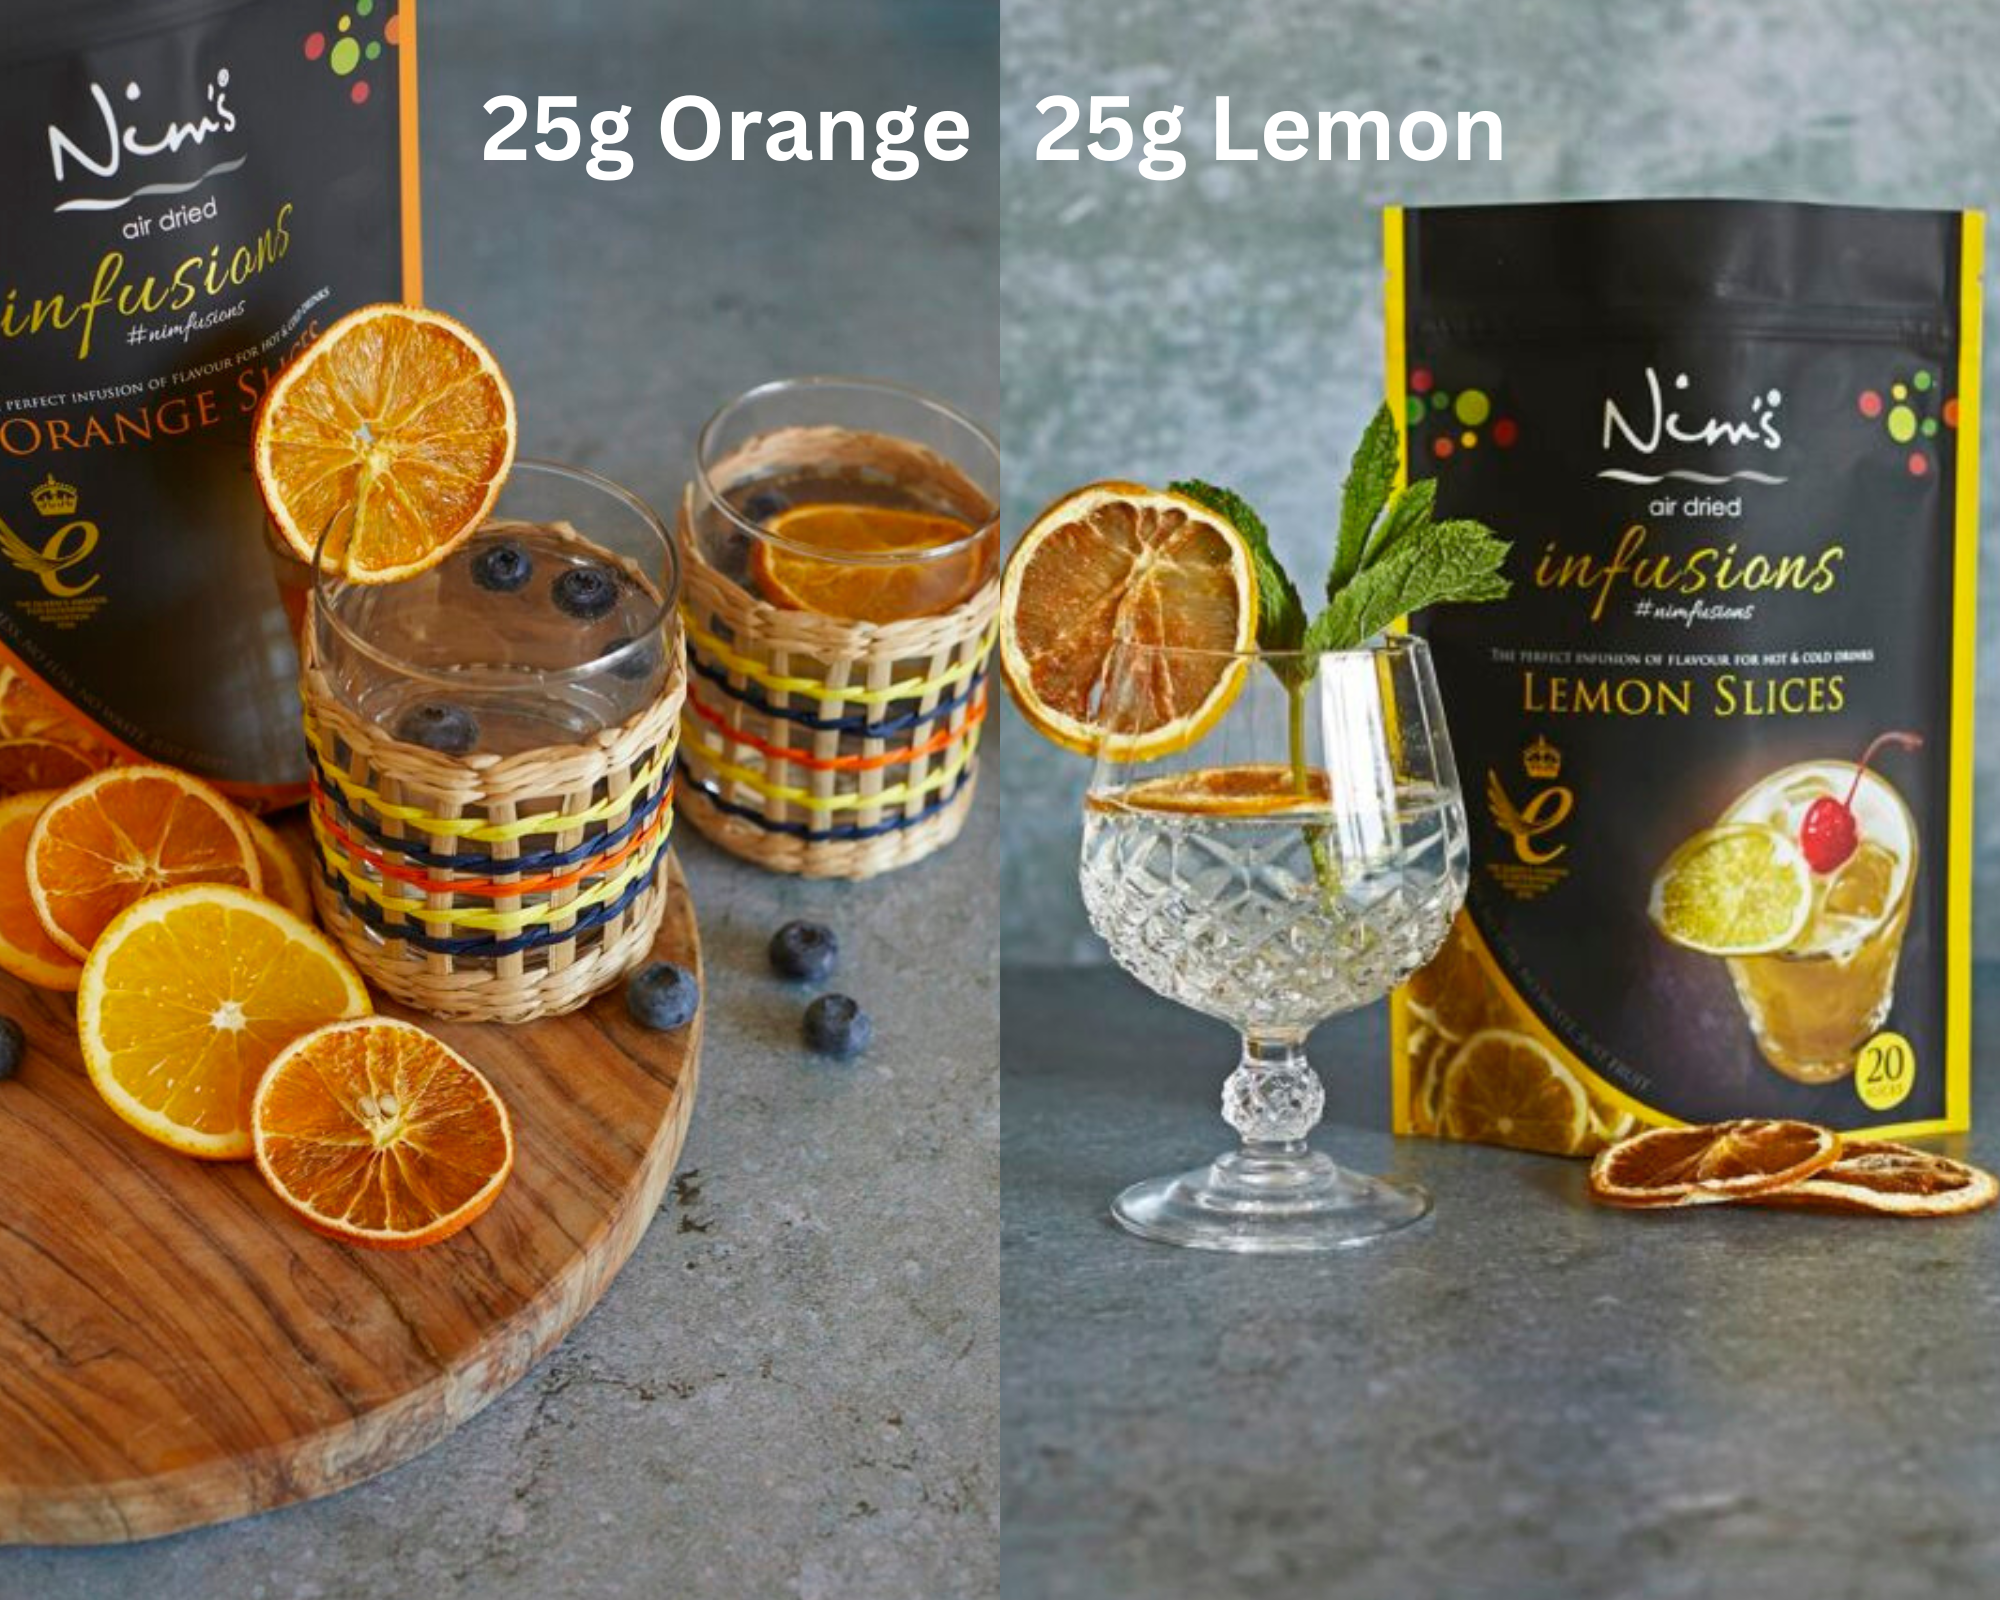 Mix of orange and lemon slices